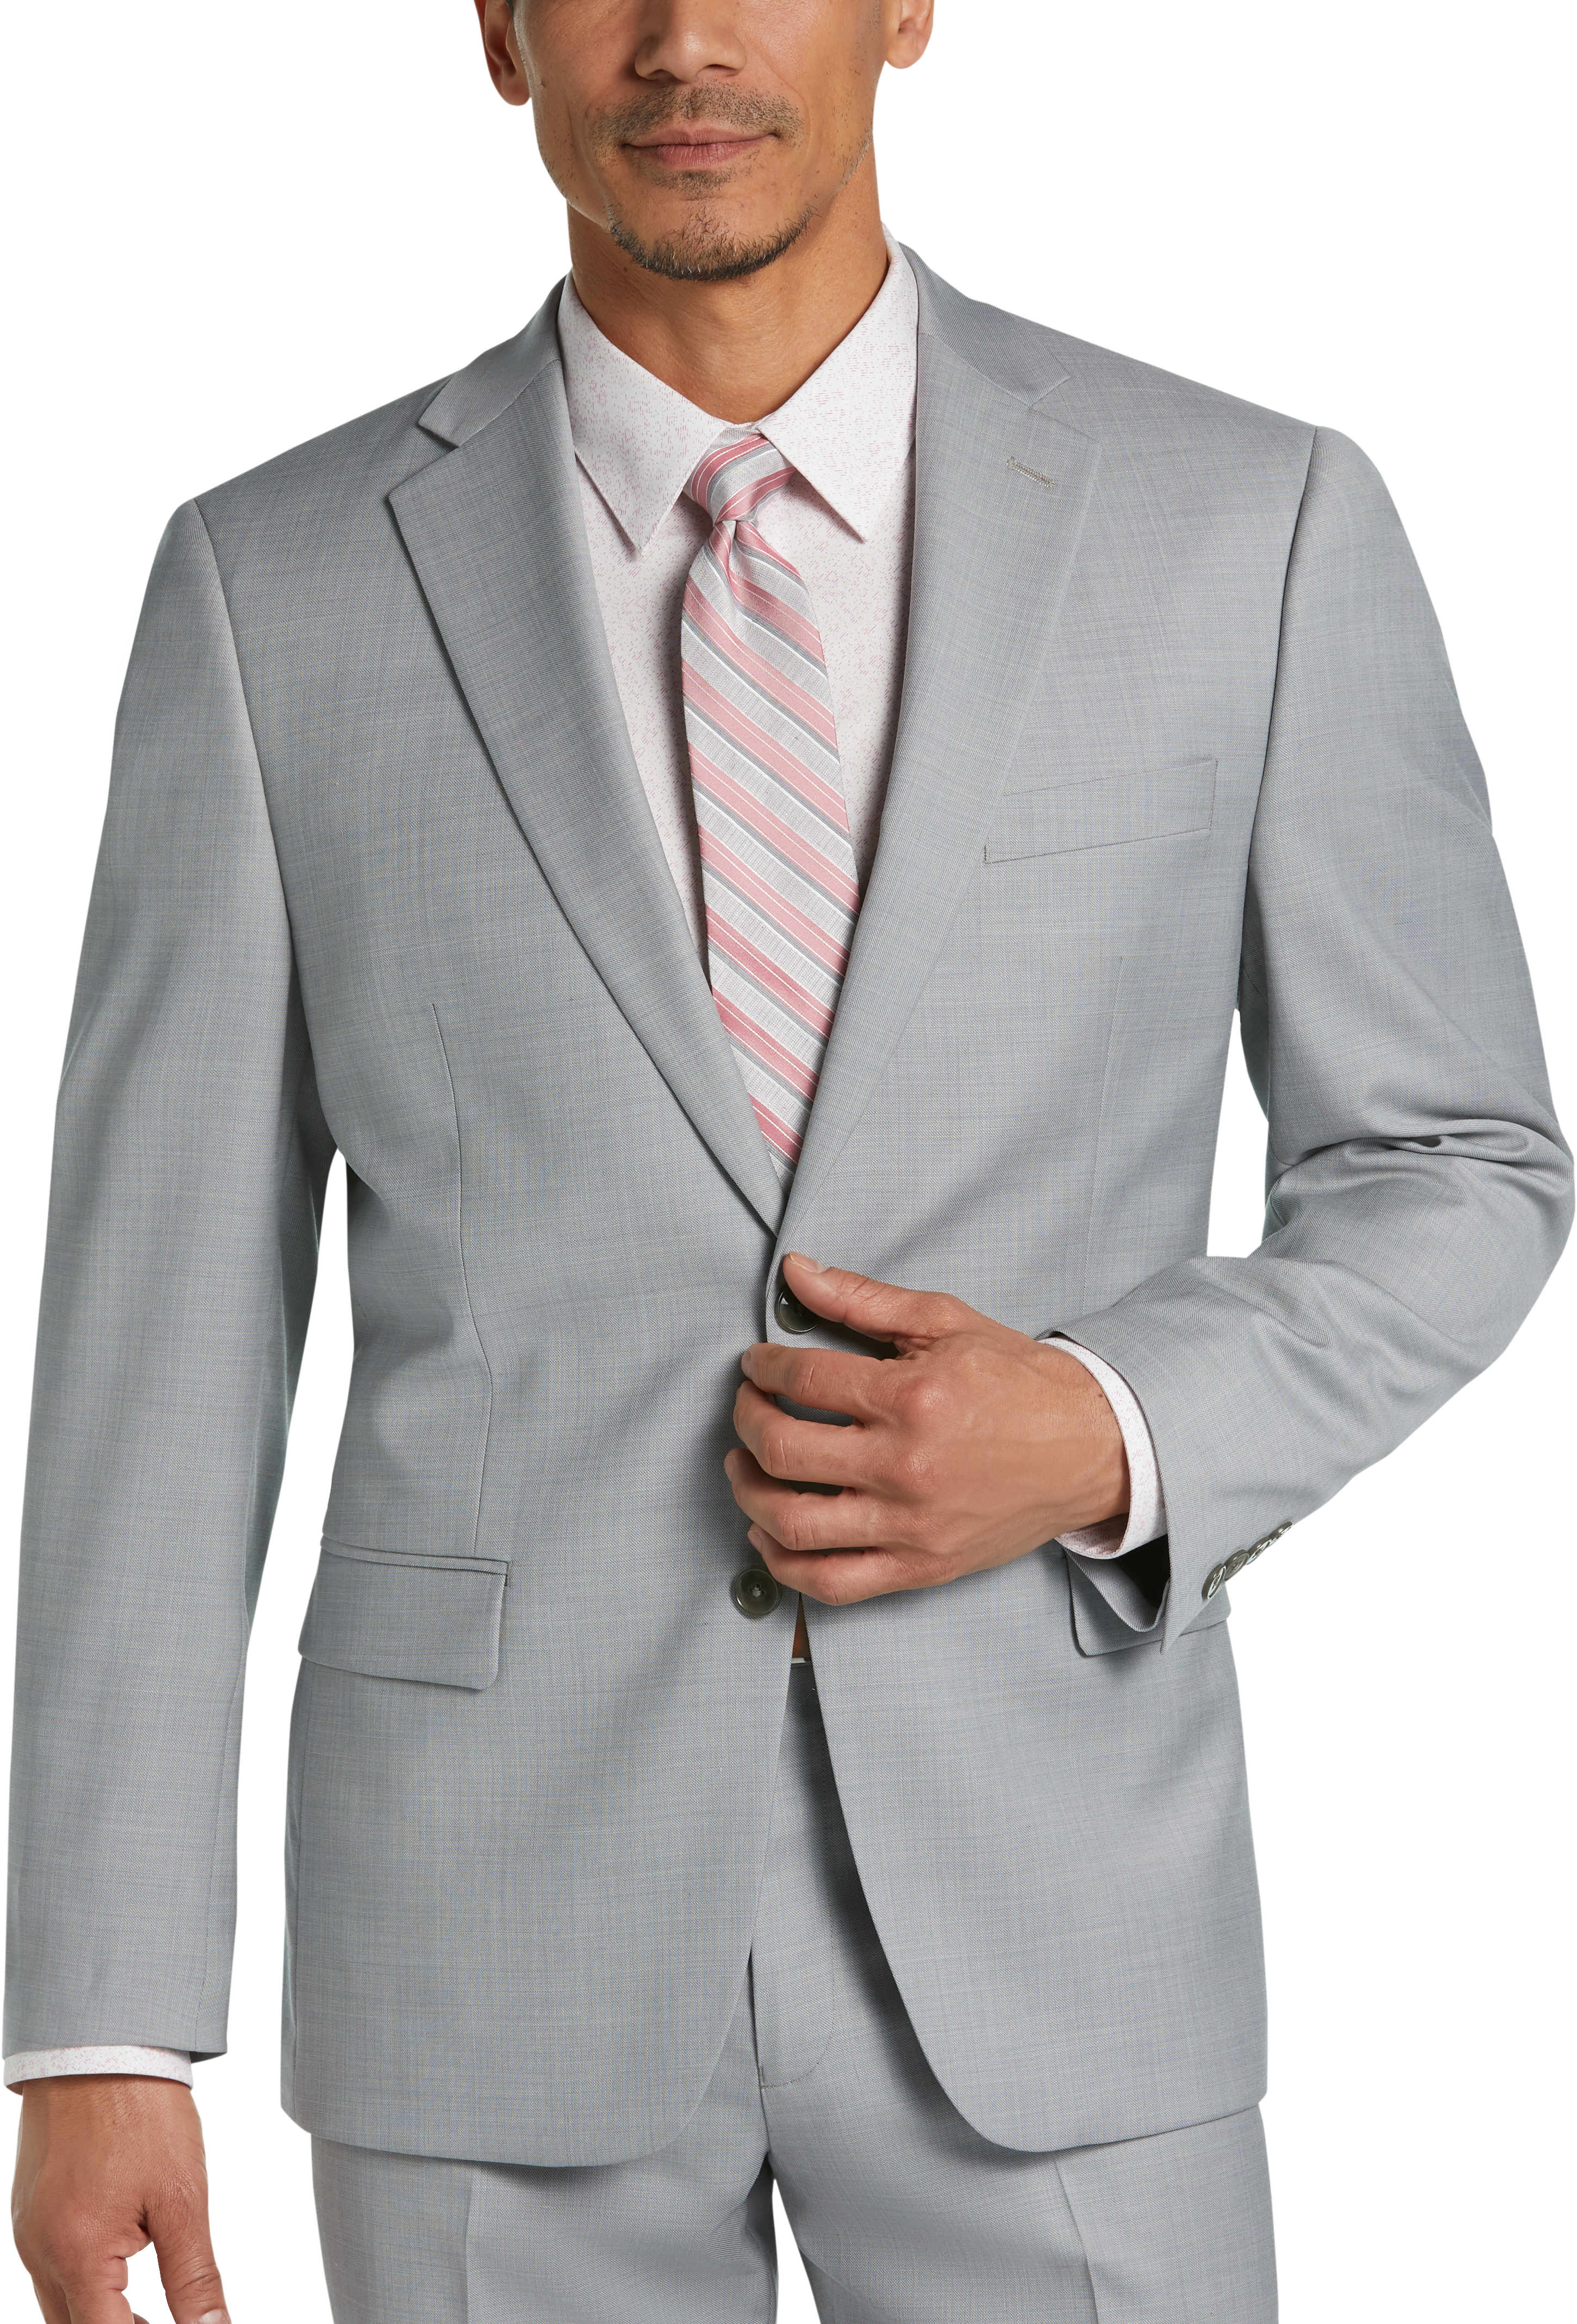 Calvin Klein Light Gray Sharkskin Modern Fit Suit - Men's Suits | Men's ...